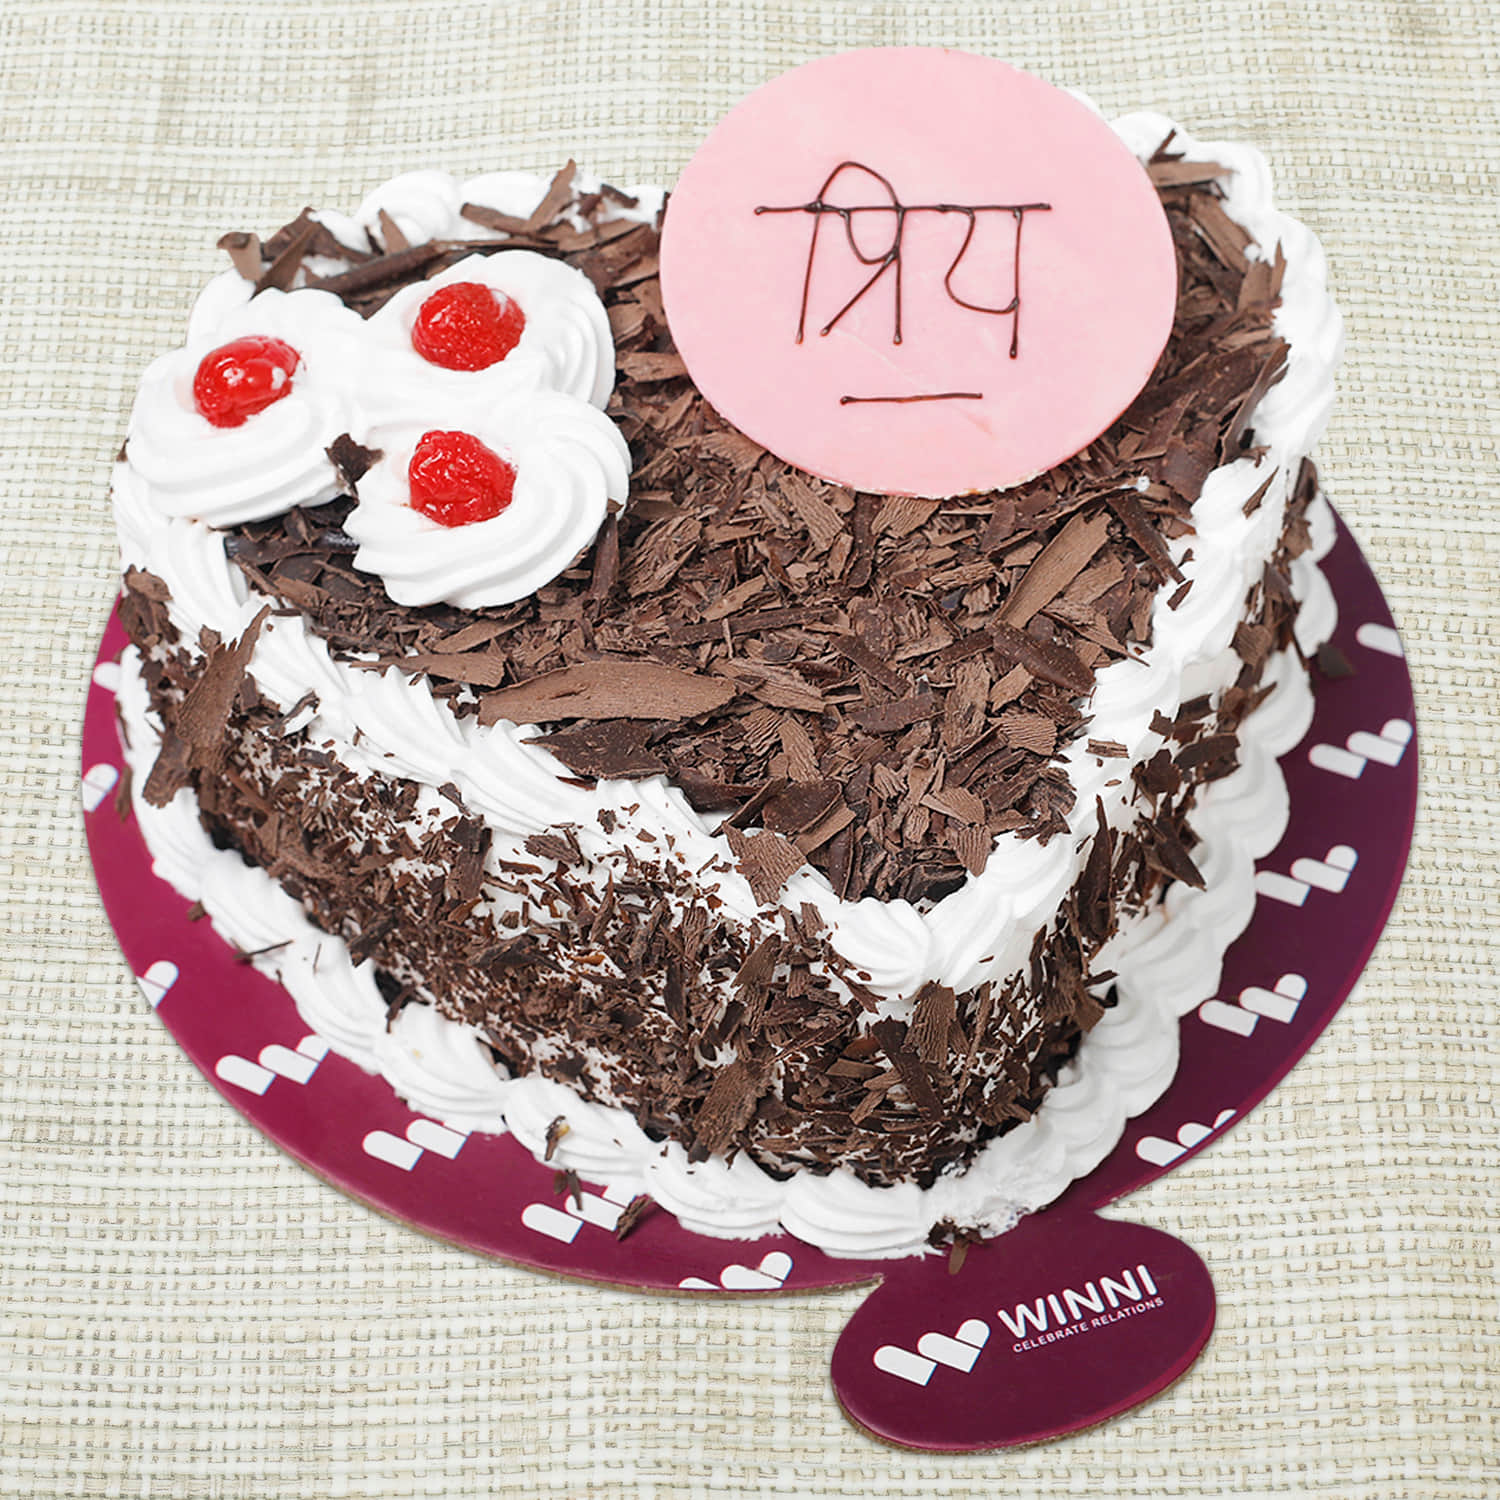 personalized cakes by priya | #Anniversary cake❤️‍🔥🤩 . . . . .  .#anniversarycake #lovecake #pcmcbaker #anniversary #birthday #love  #wedding #gift #happybir... | Instagram